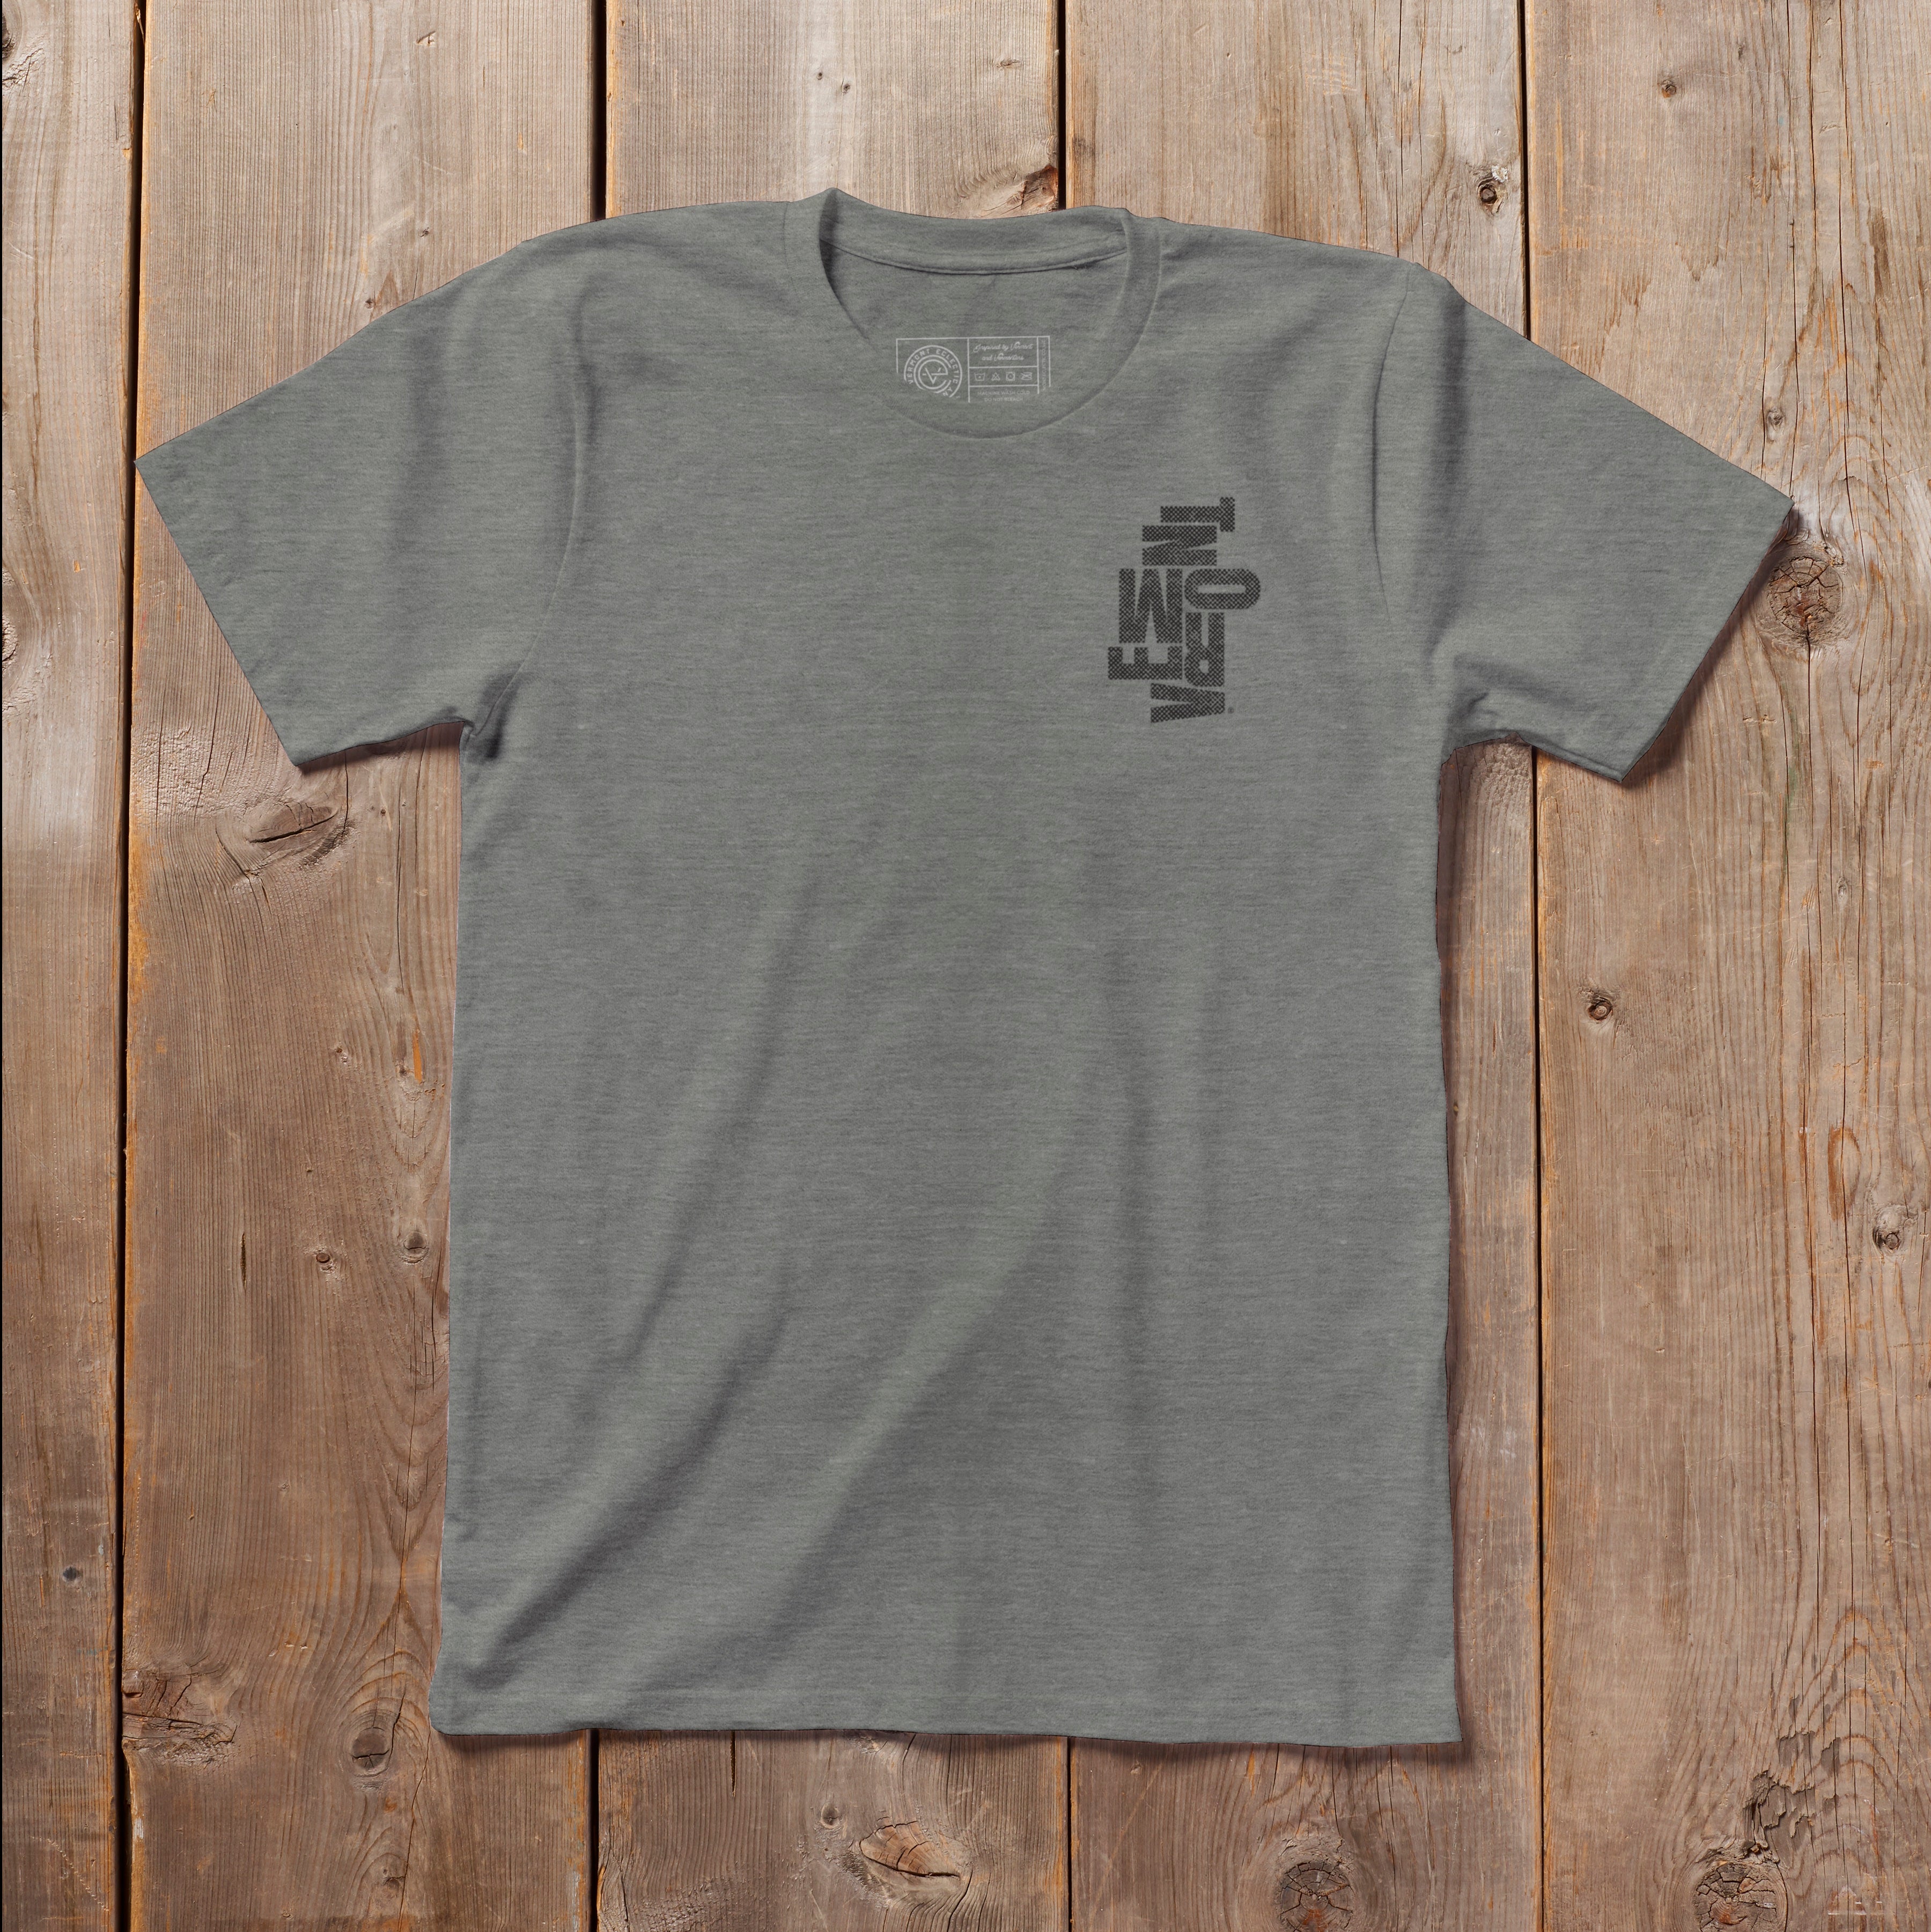 Vermont type design in black on grey shirt